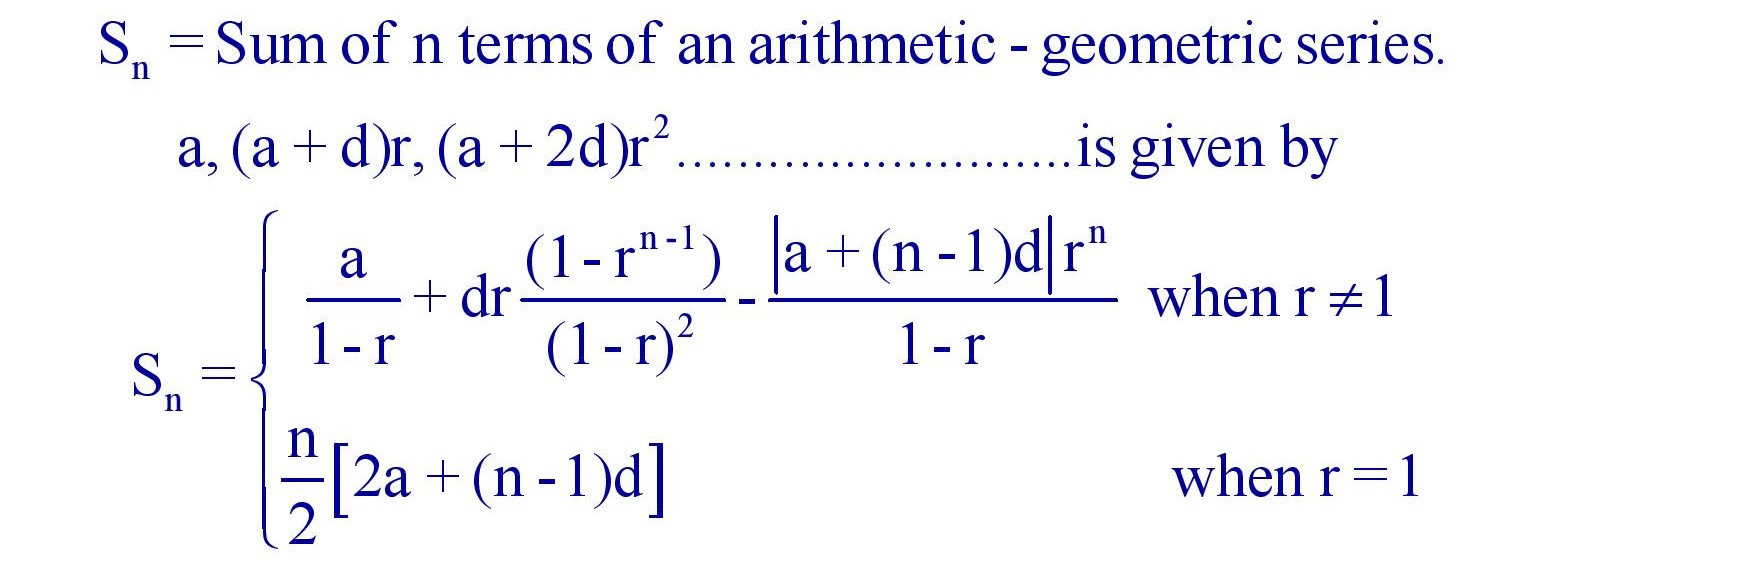 Sum of n terms of an Arithmetic - Geometric Series